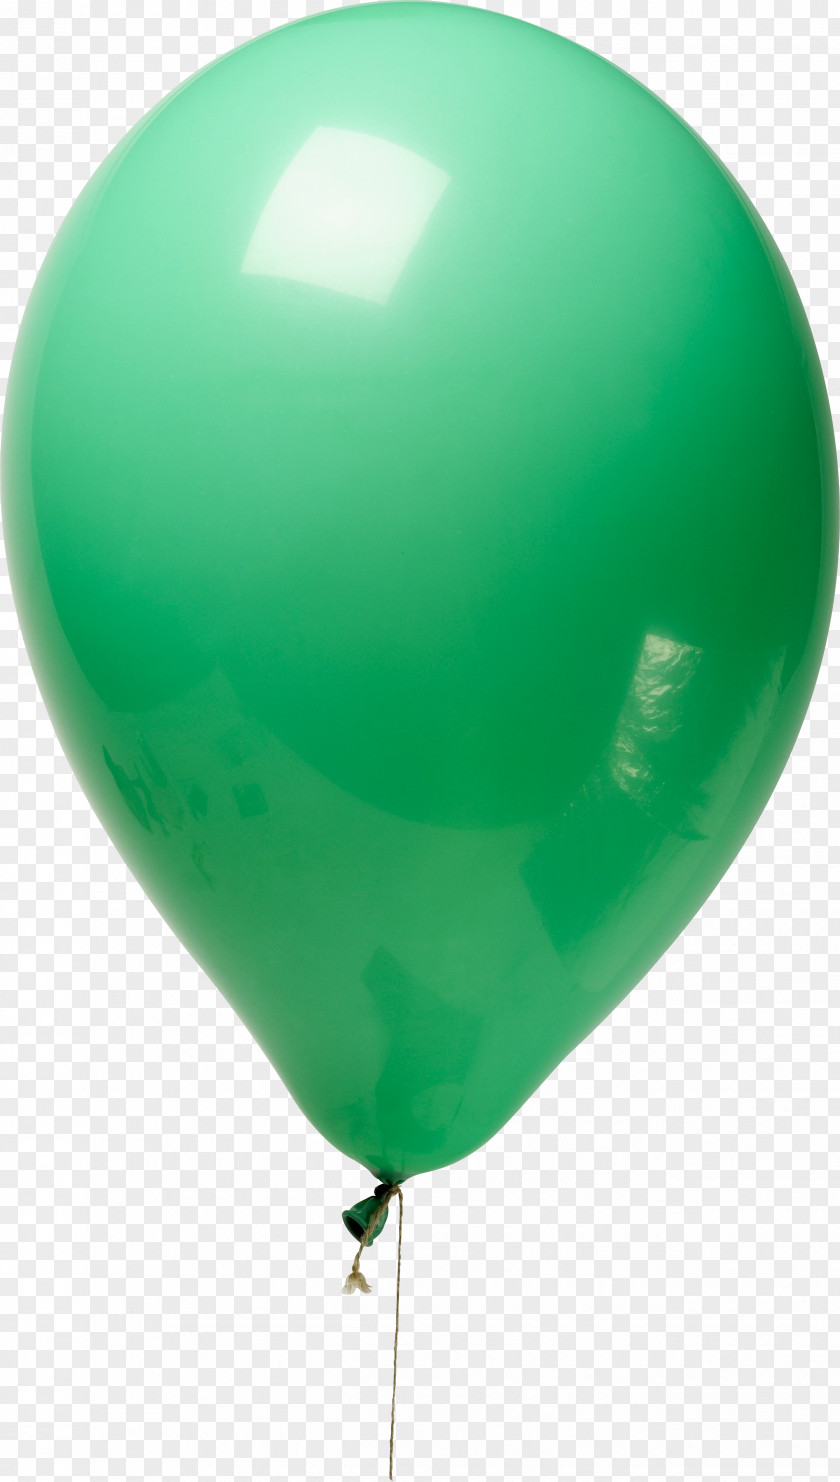 Green Balloon Image Clip Art PNG